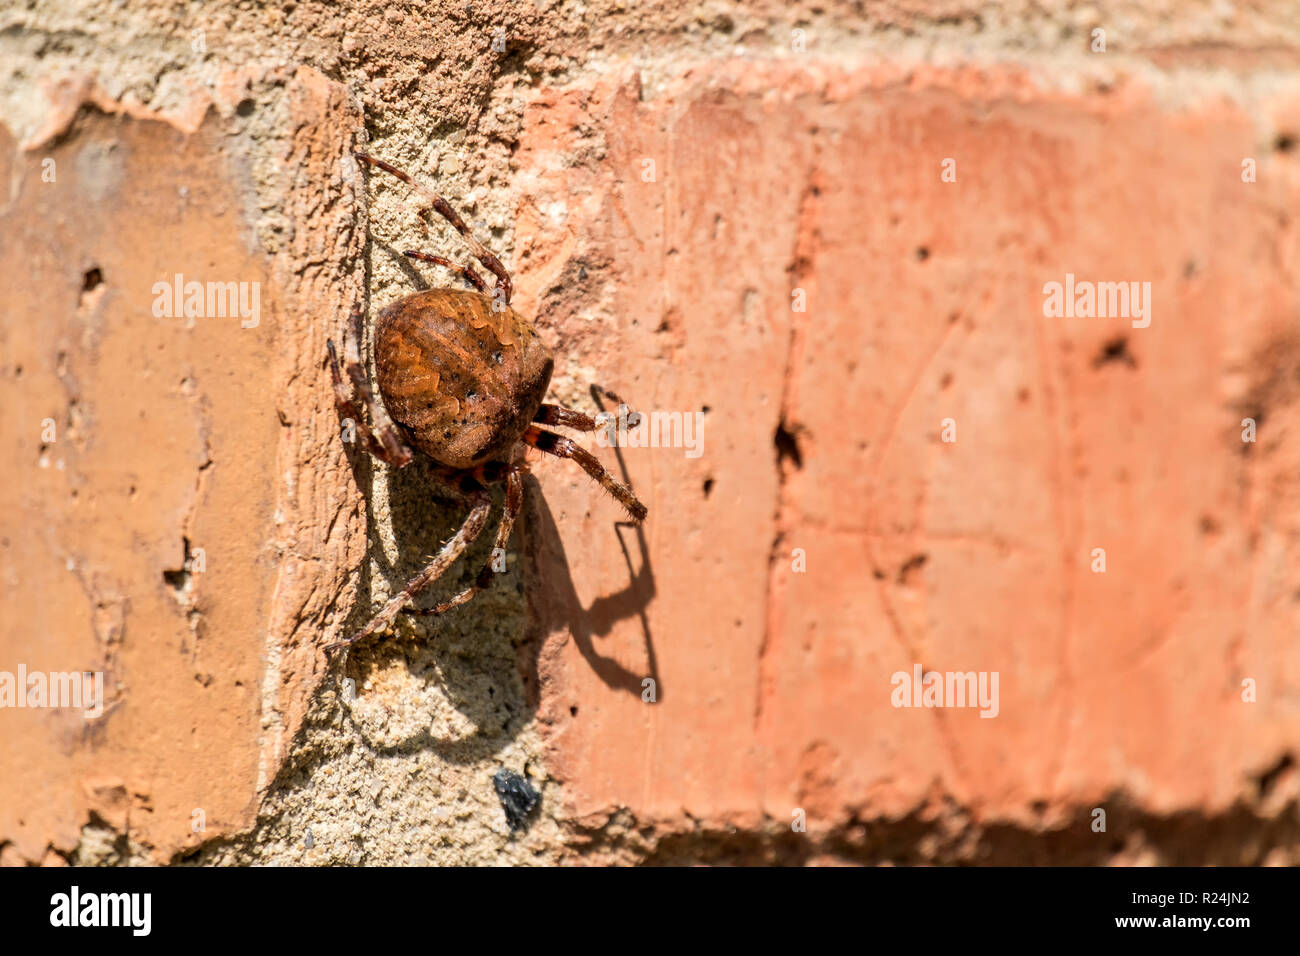 Cross spider sitting on a brick wall (Araneus diadematus) Stock Photo